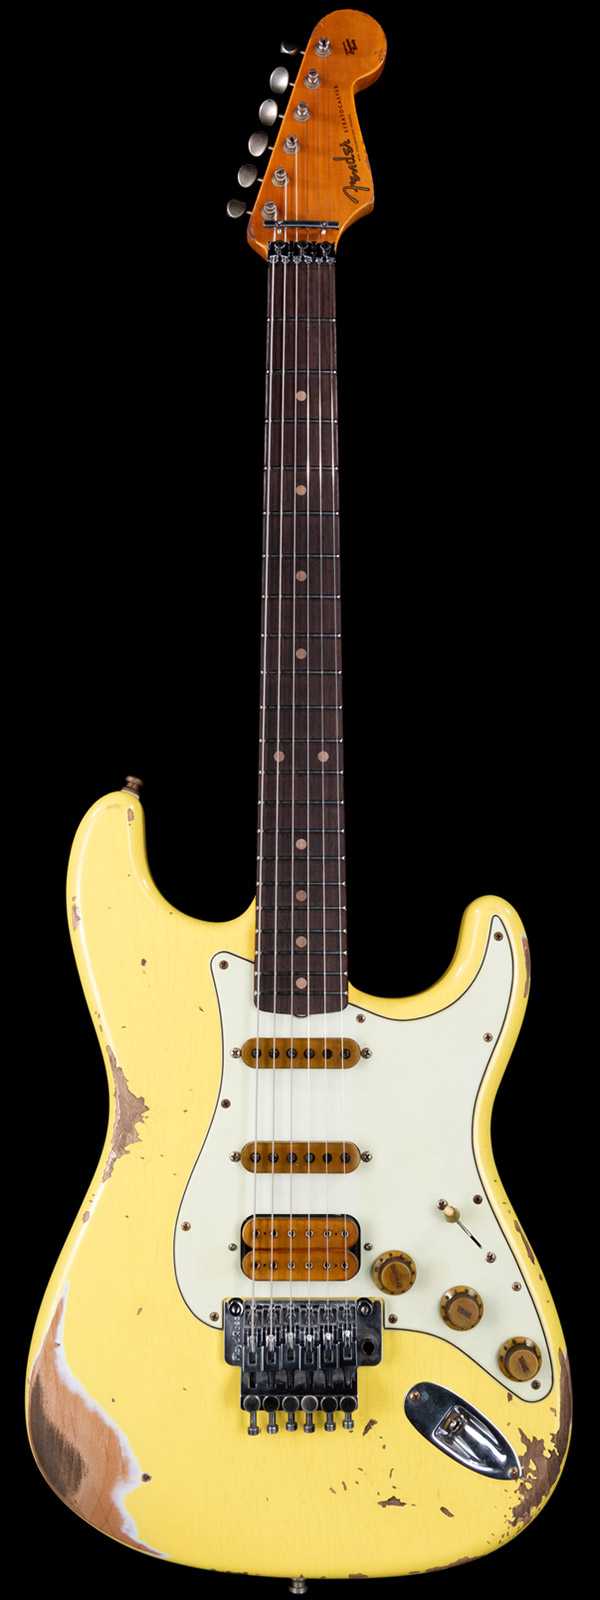 Fender Custom Shop Alley Cat Stratocaster Heavy Relic HSS Floyd Rose Rosewood Board Graffiti Yellow